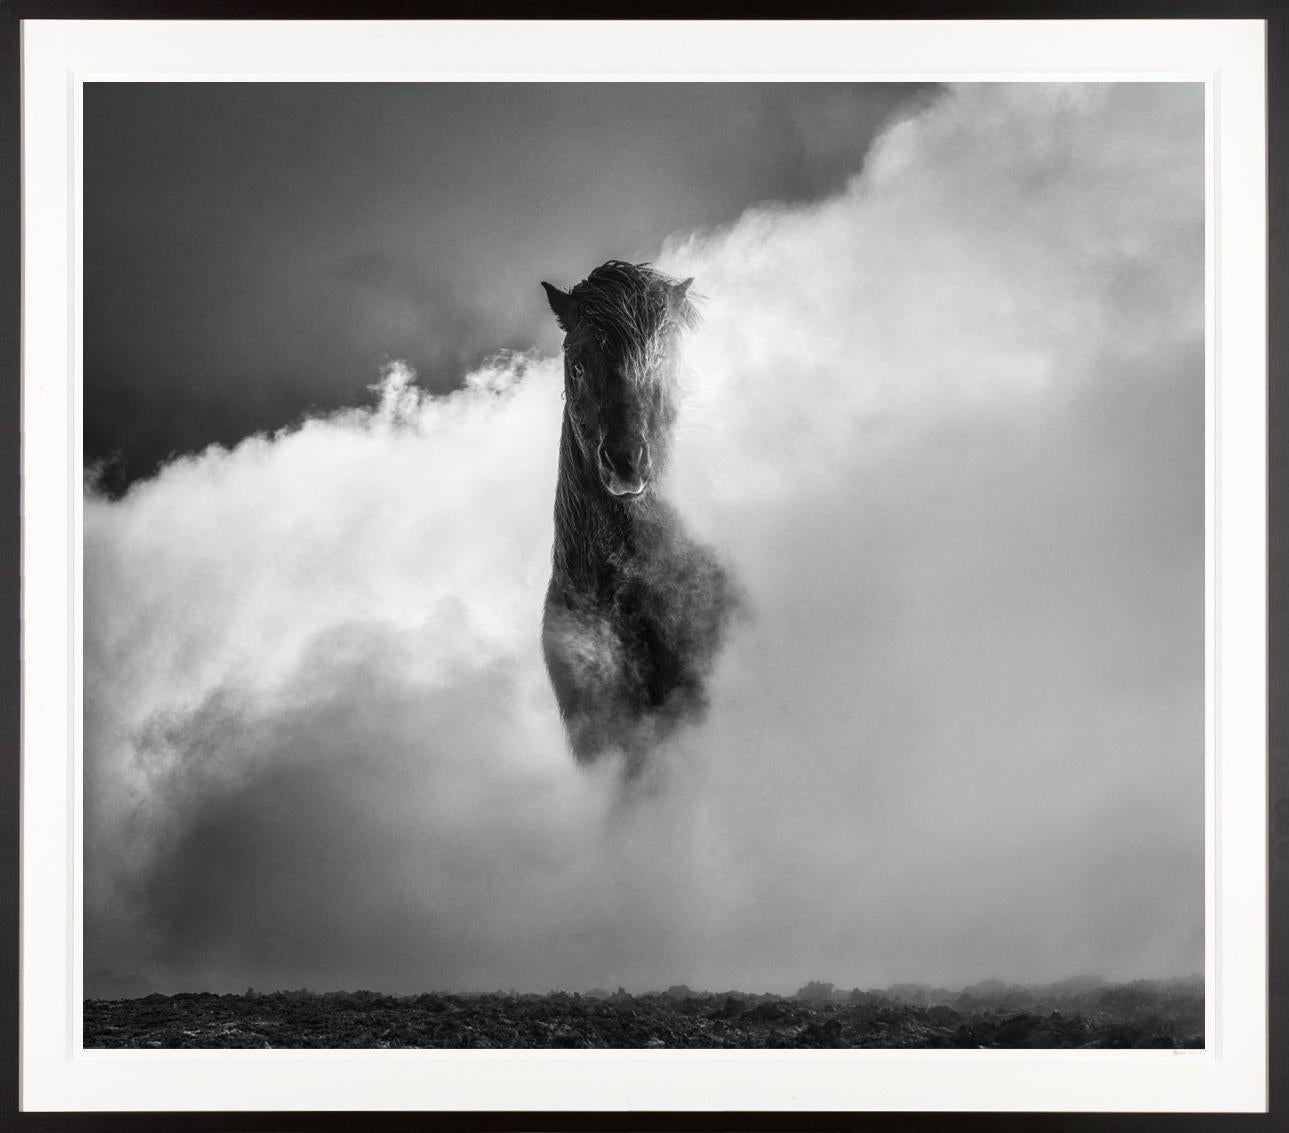 David Yarrow Landscape Photograph - "66 Degrees North" Wold Horse Shot in Namafjall Georhermal Area, Iceland 